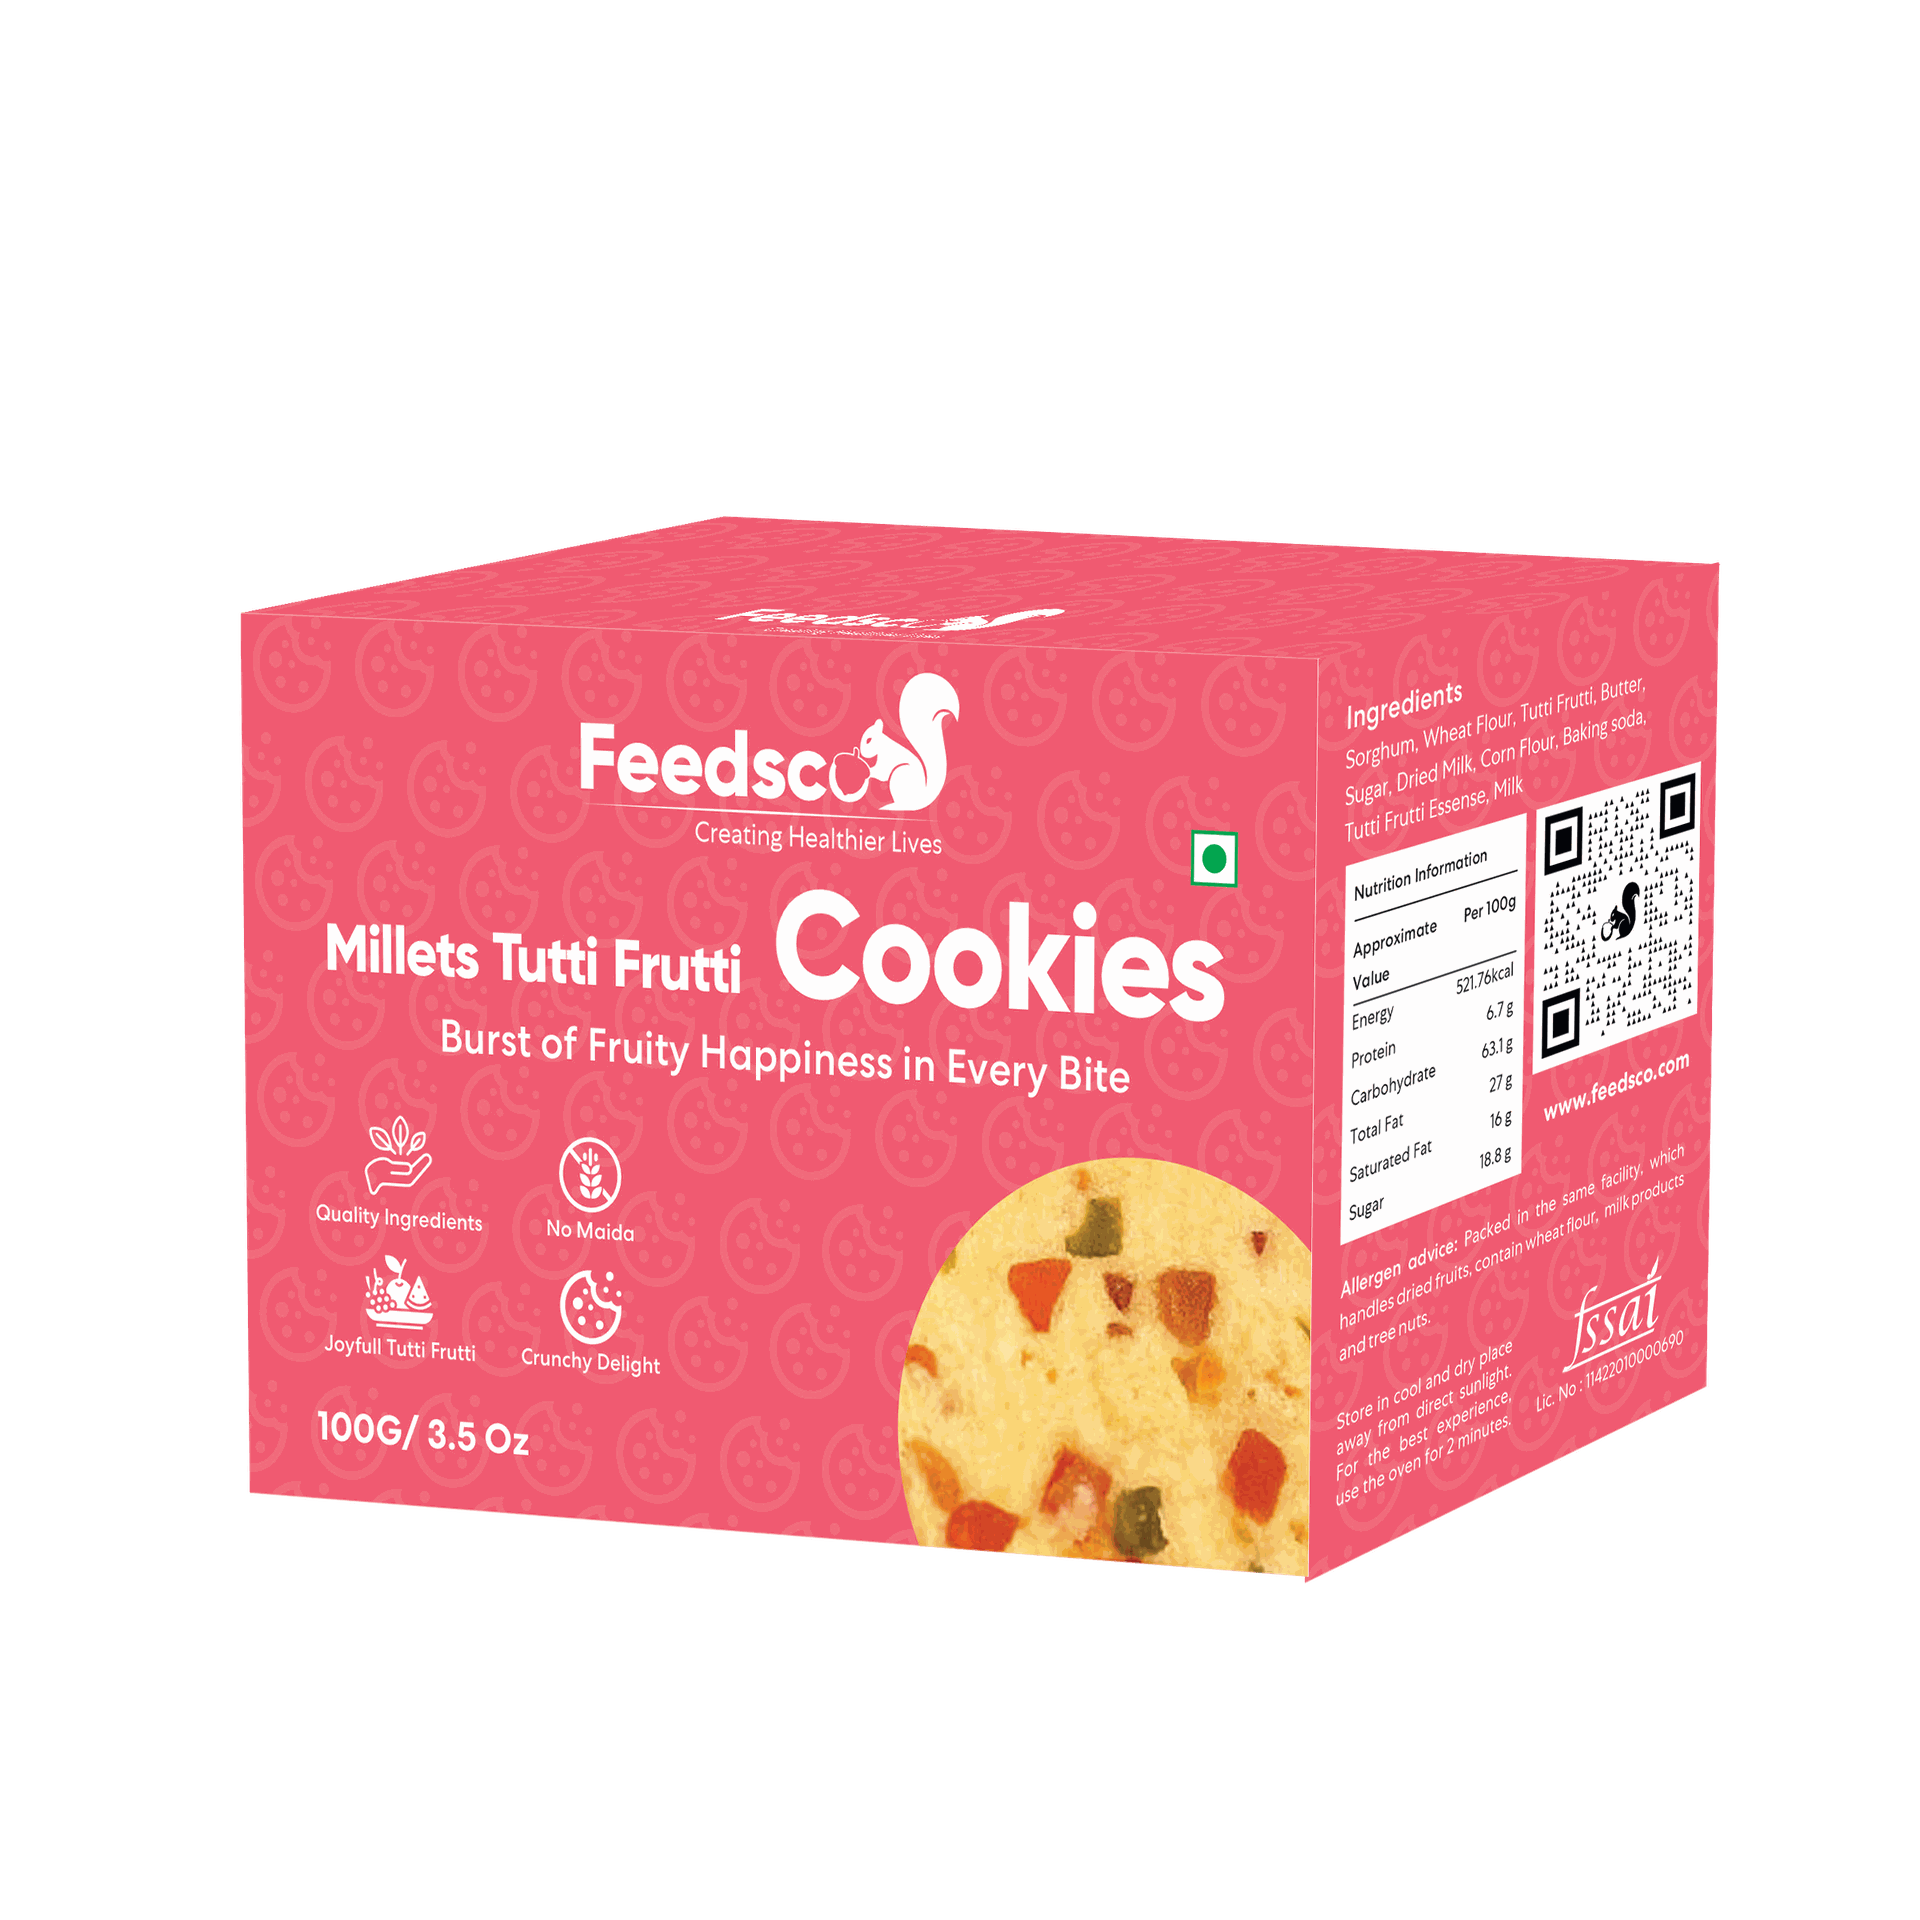 Feedsco Millets Tutti Frutti Cookies Tasty & Healthy Cookies | Natural Sweetness | 100g | Pack of 3